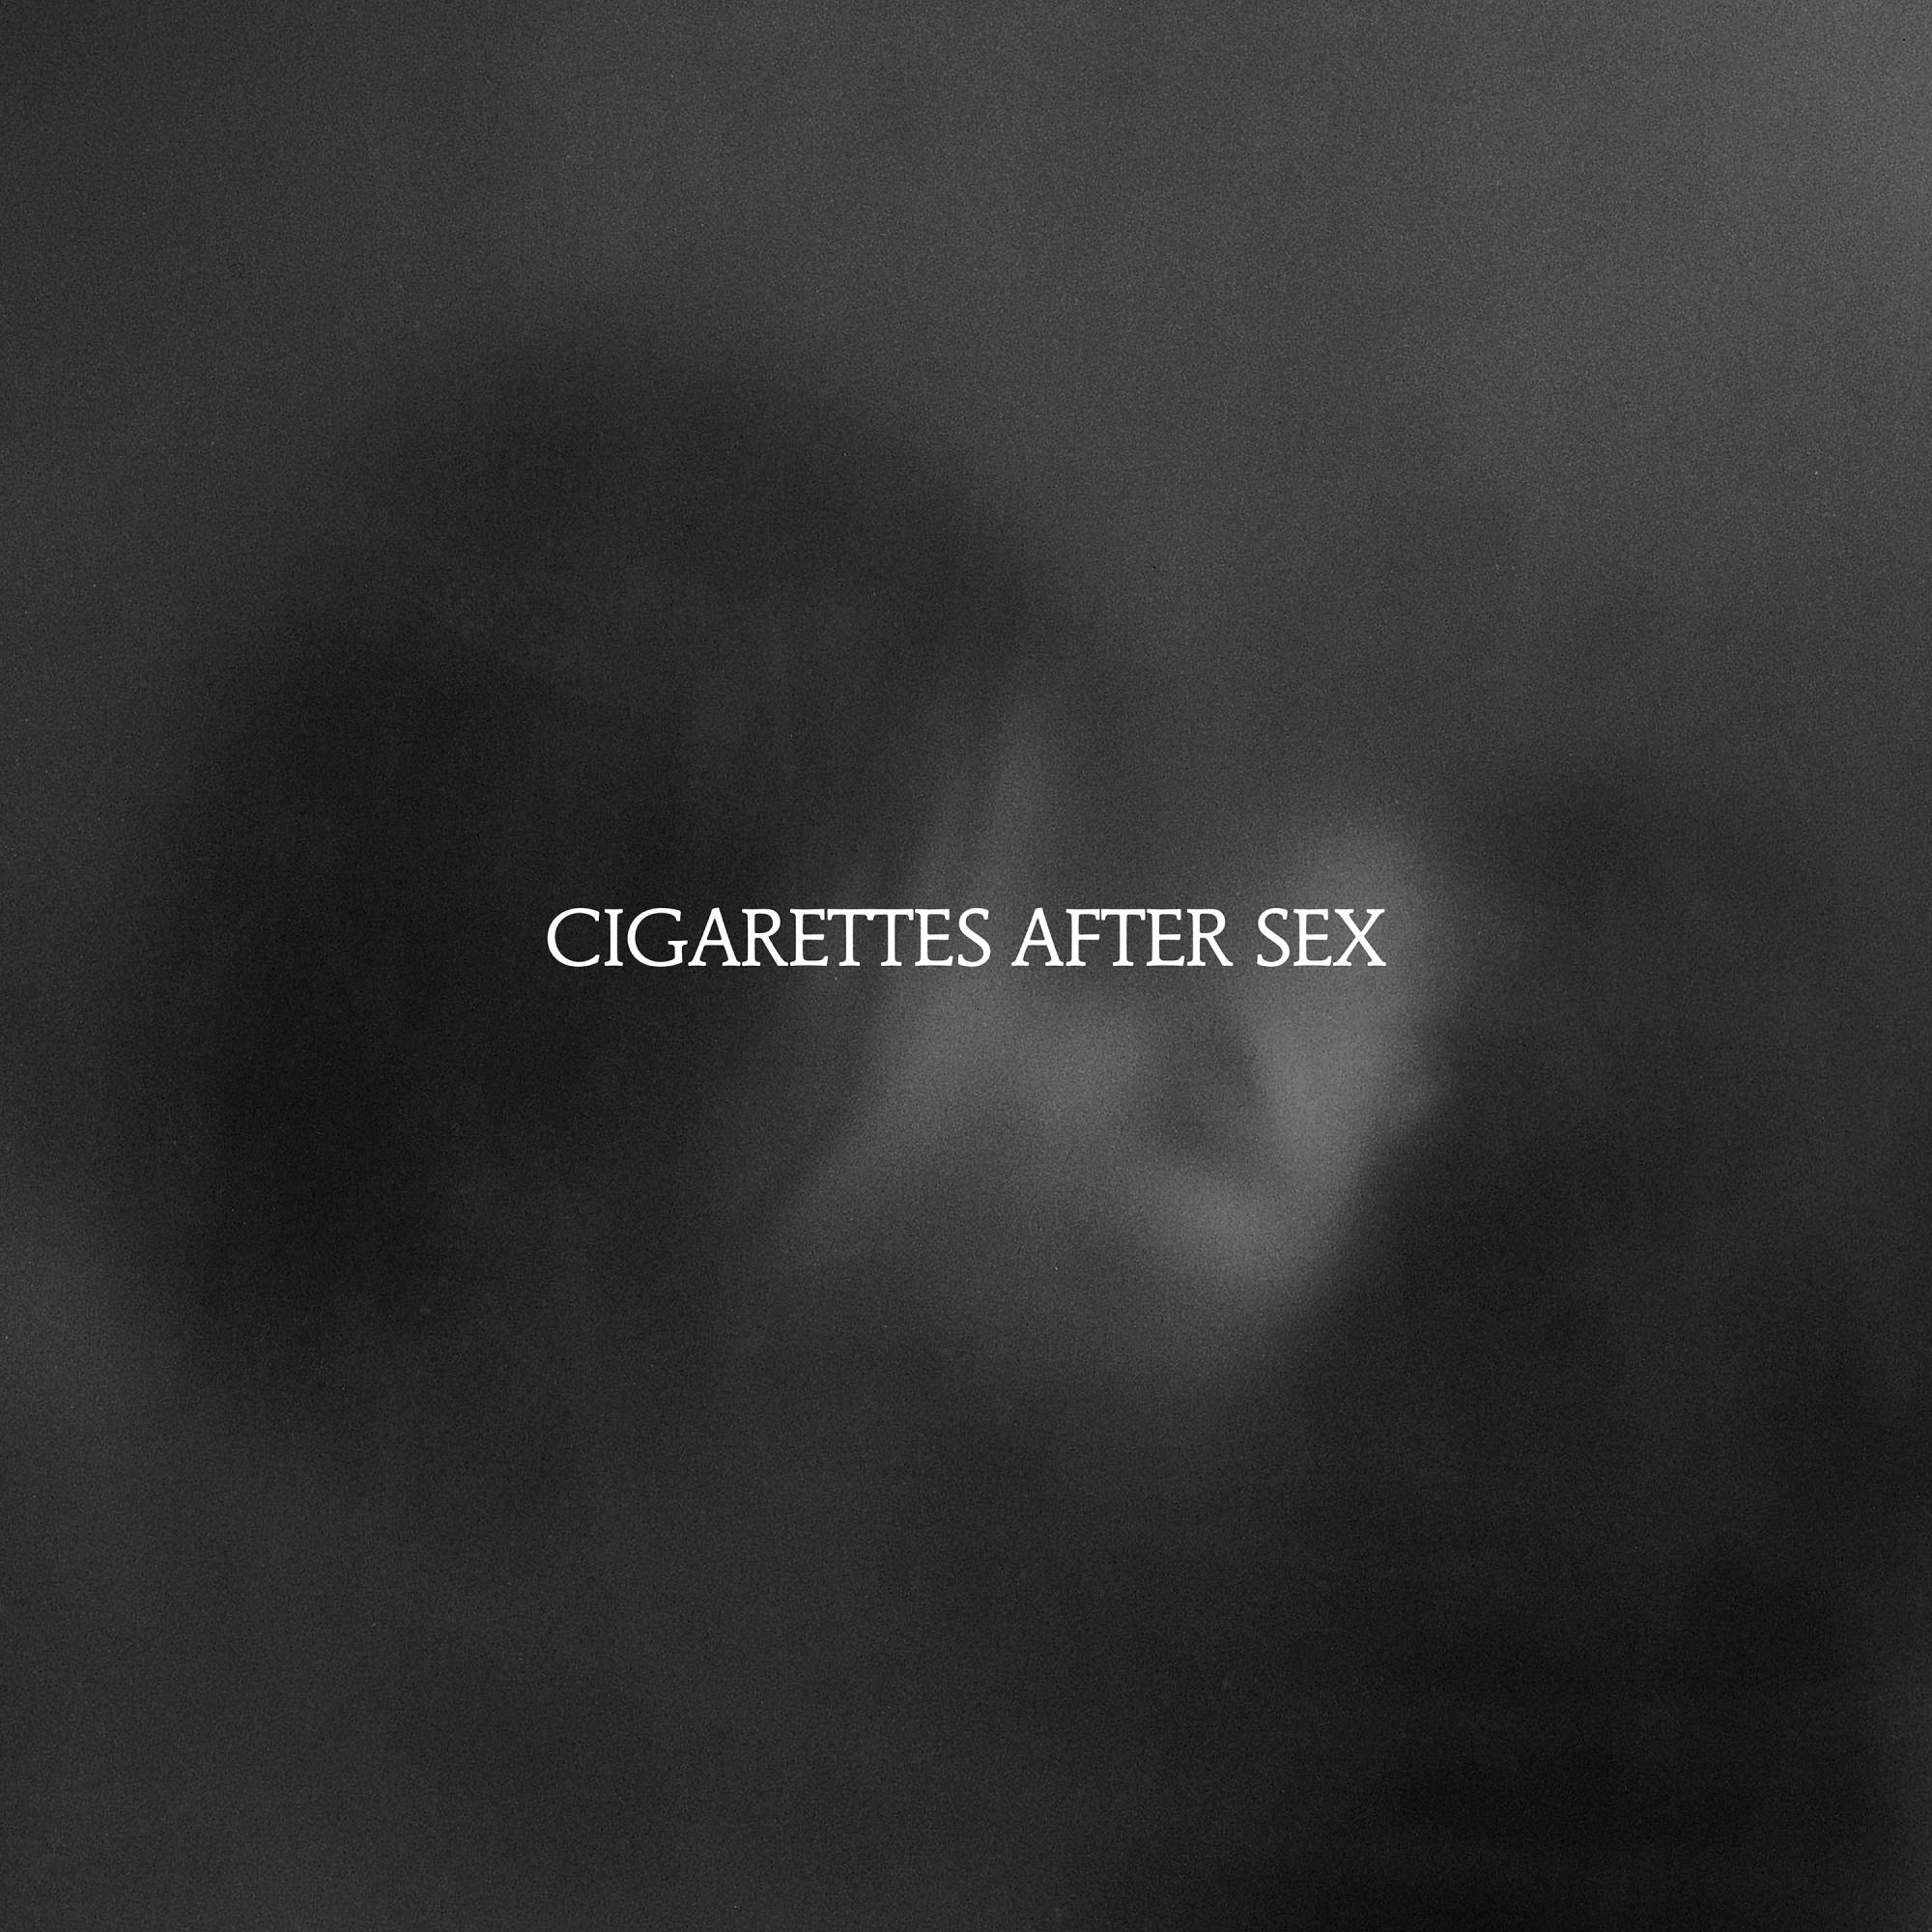 Cigarettes After Sex 'X's' album artwork. Cigarettes After Sex 'X's' album artwork. Cover Photo Credit: Min Byung Hun,2010 / Gallery Kuzo